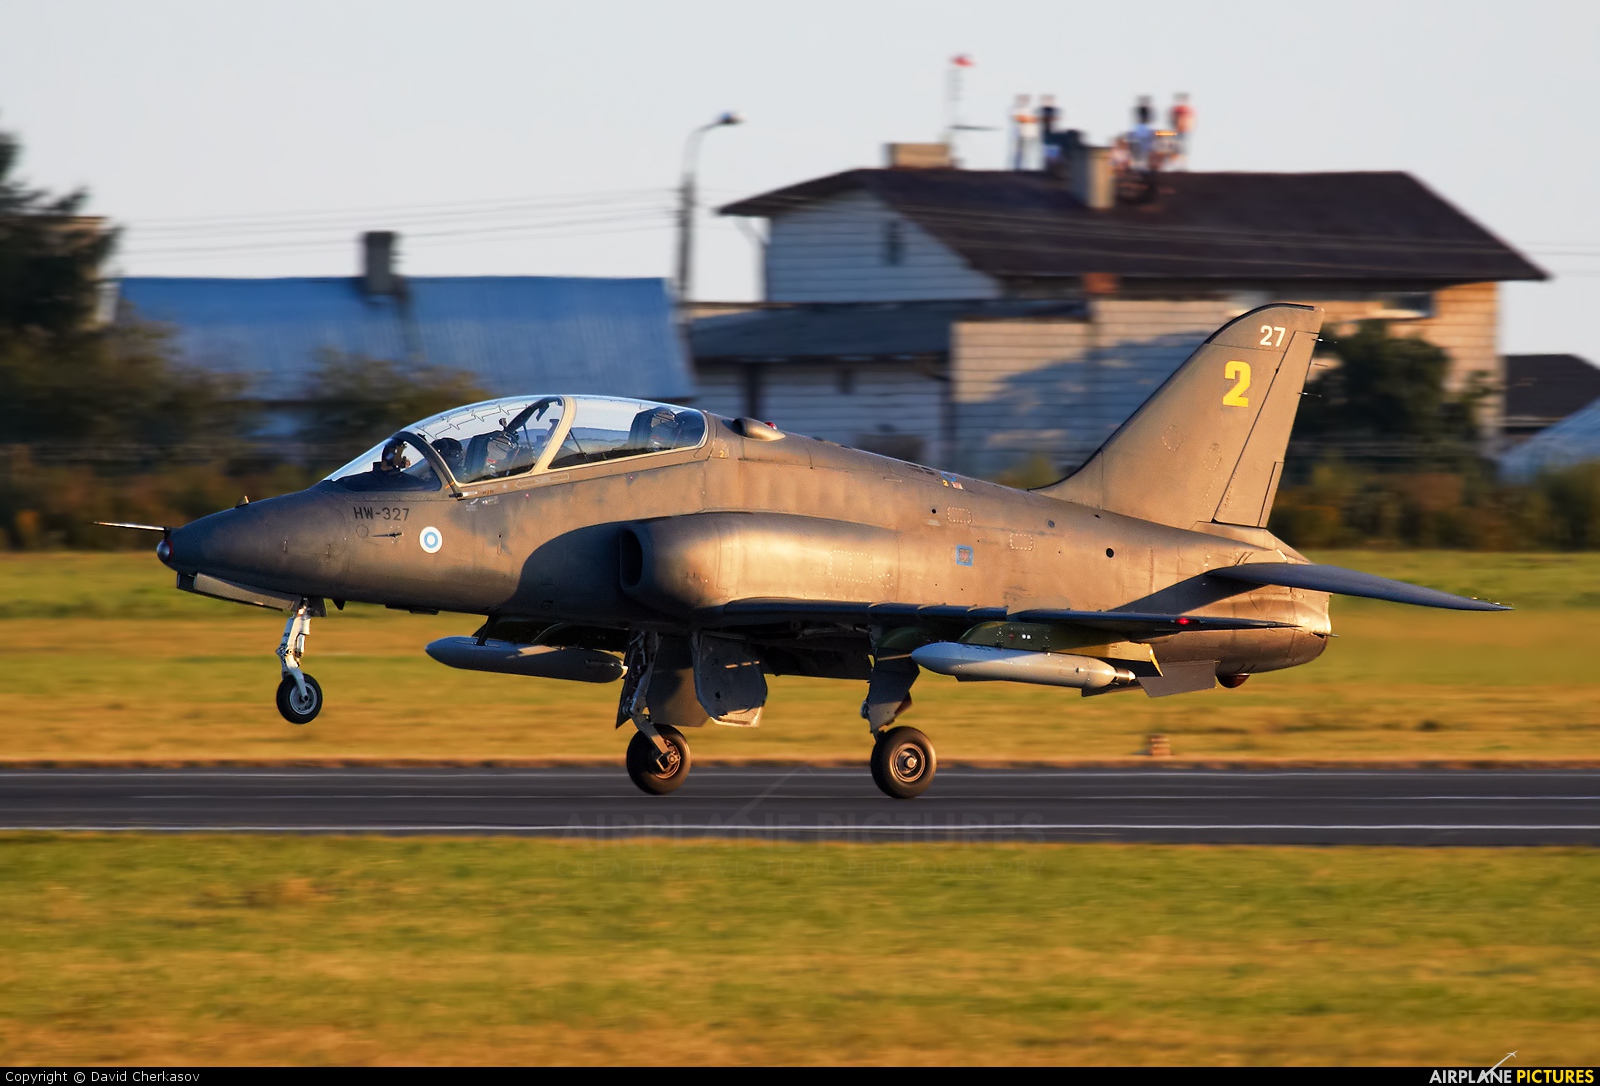 Finland - Air Force: Midnight Hawks HW-327 aircraft at Radom - Sadków